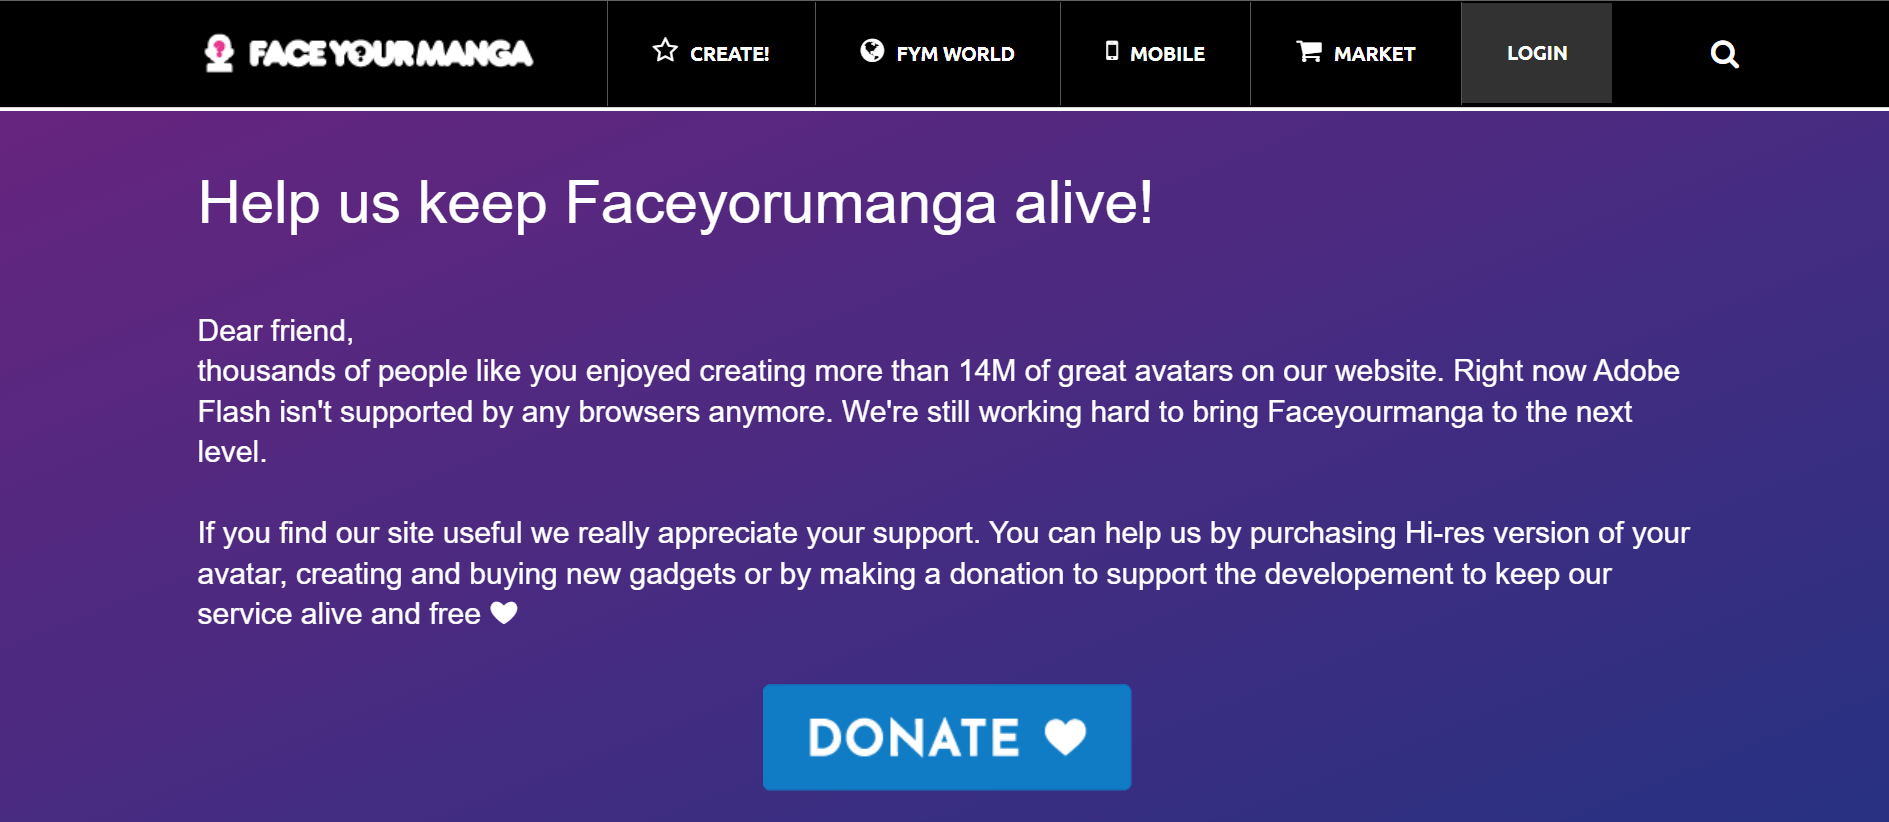 FaceYourManga's website